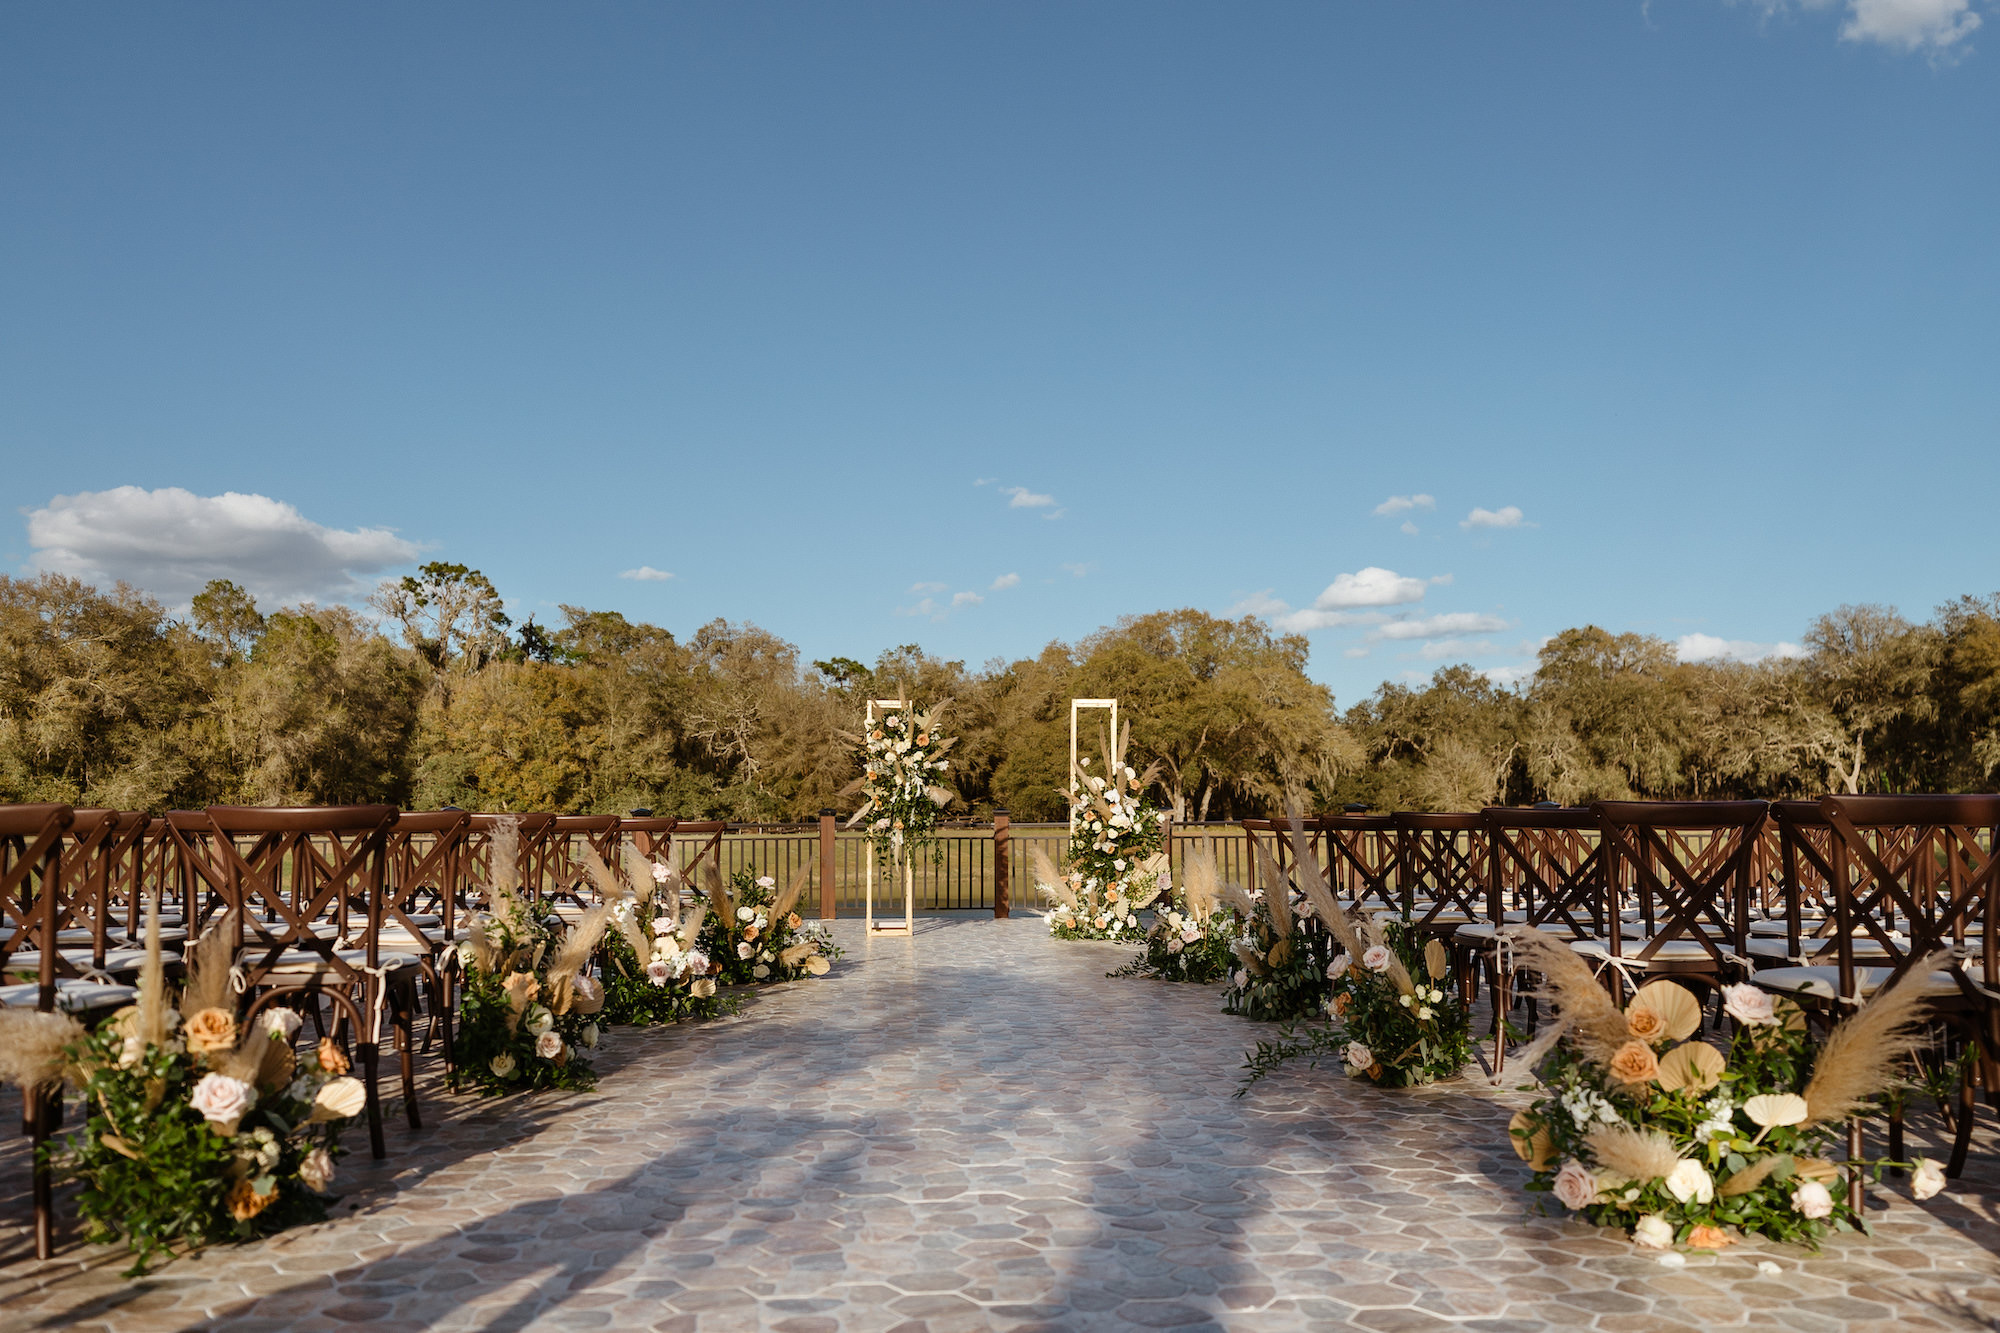 Fall Boho Aisle Decor Inspiration | Outdoor Lakeside Wedding Ceremony | Unique Altar Ideas | Tampa Bay Wedding Venue Simpson Lakes